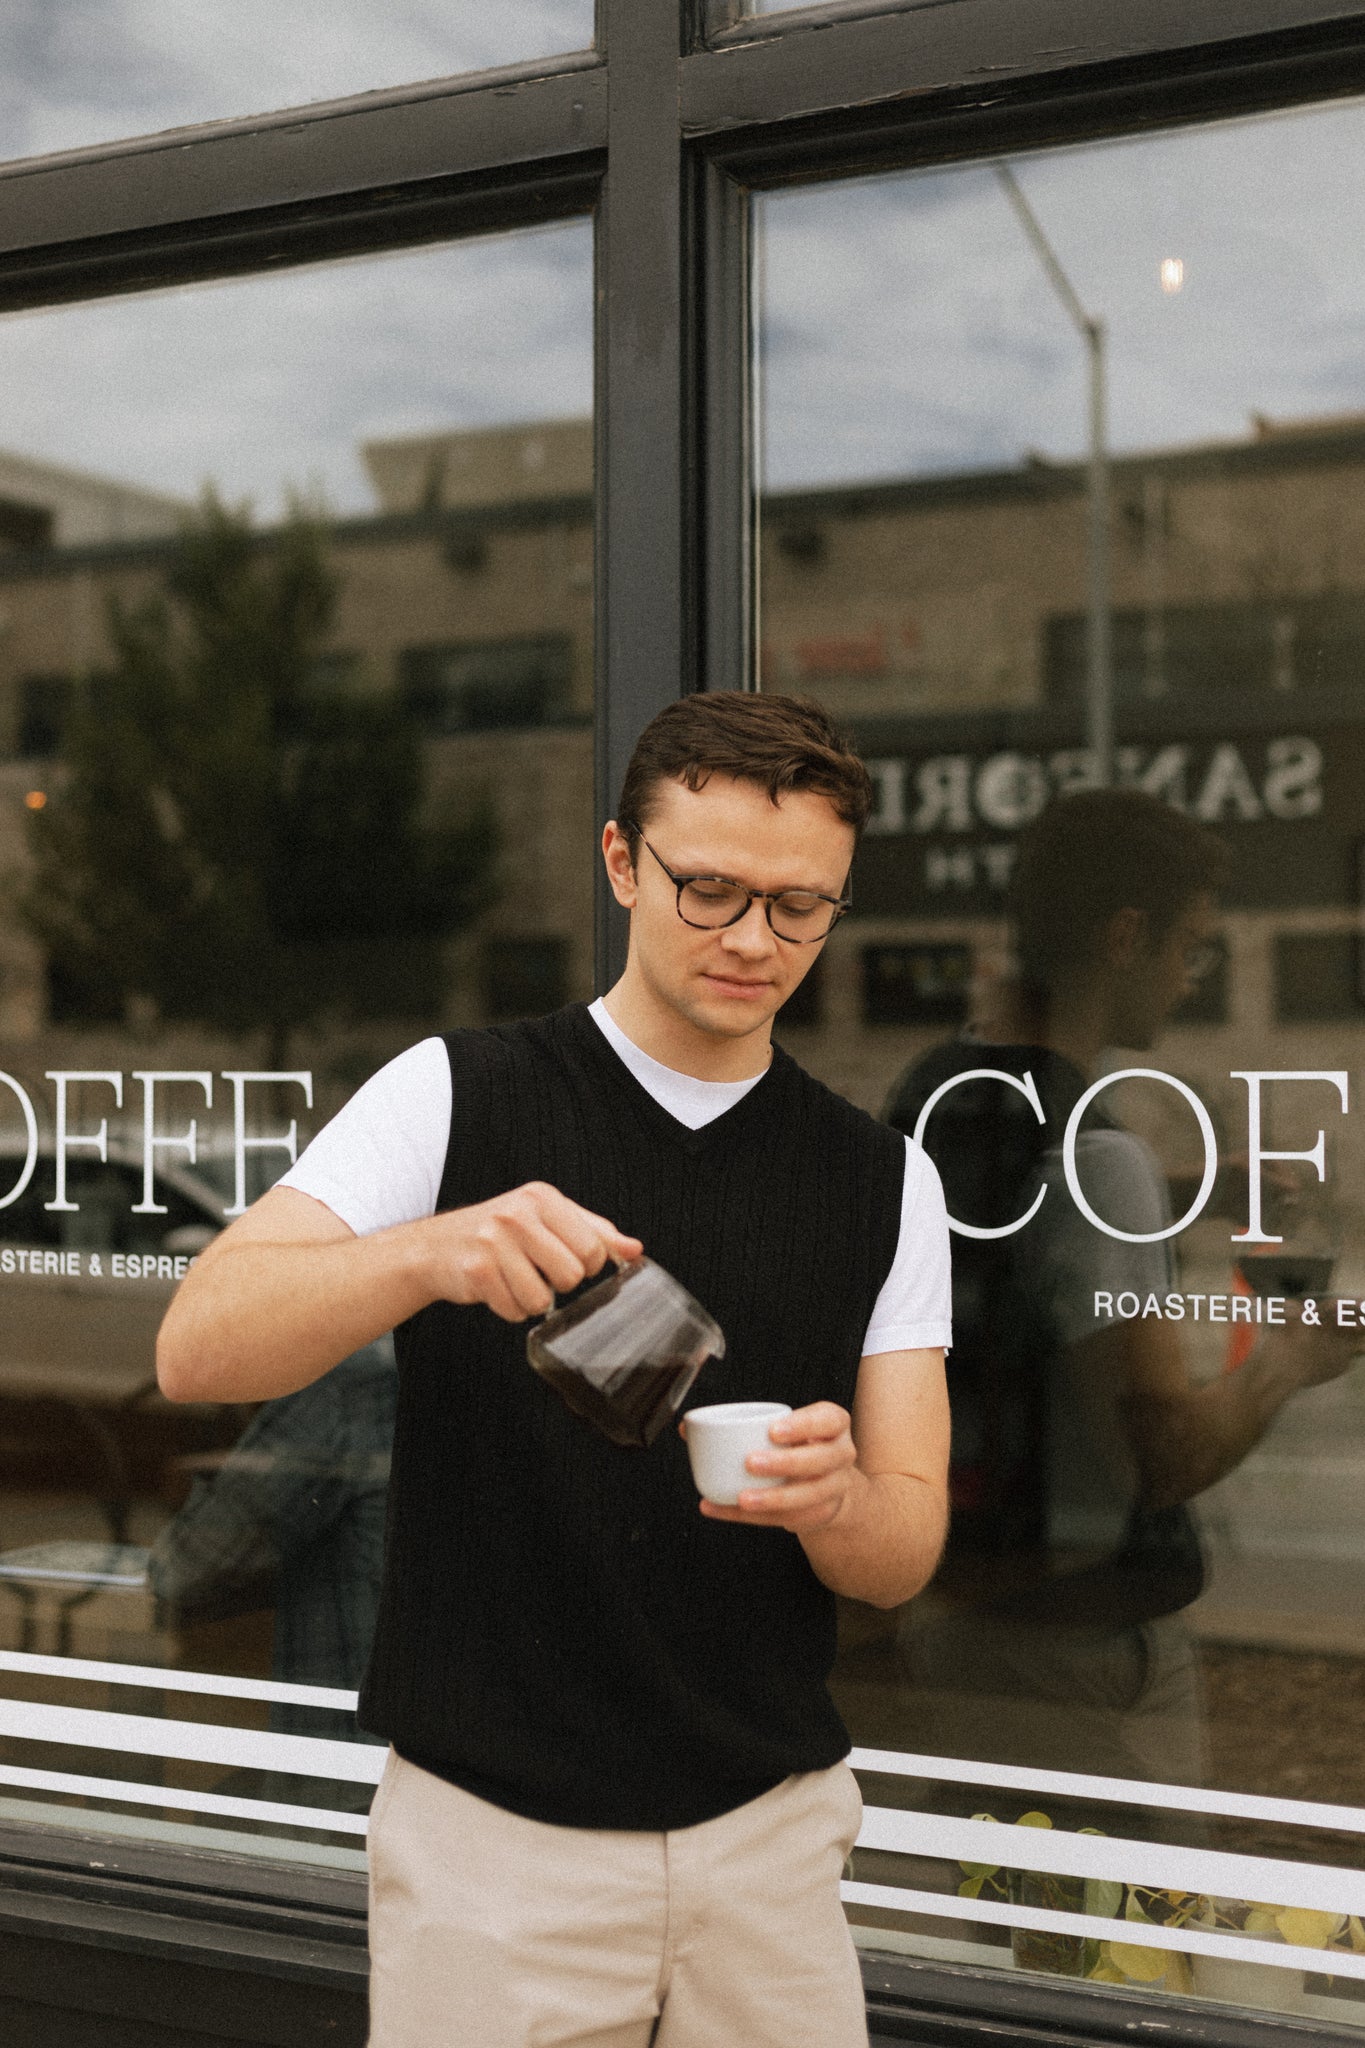 Coffea Roasterie - Specialty Coffee Shop and Espresso Bar in Sioux Falls, South Dakota